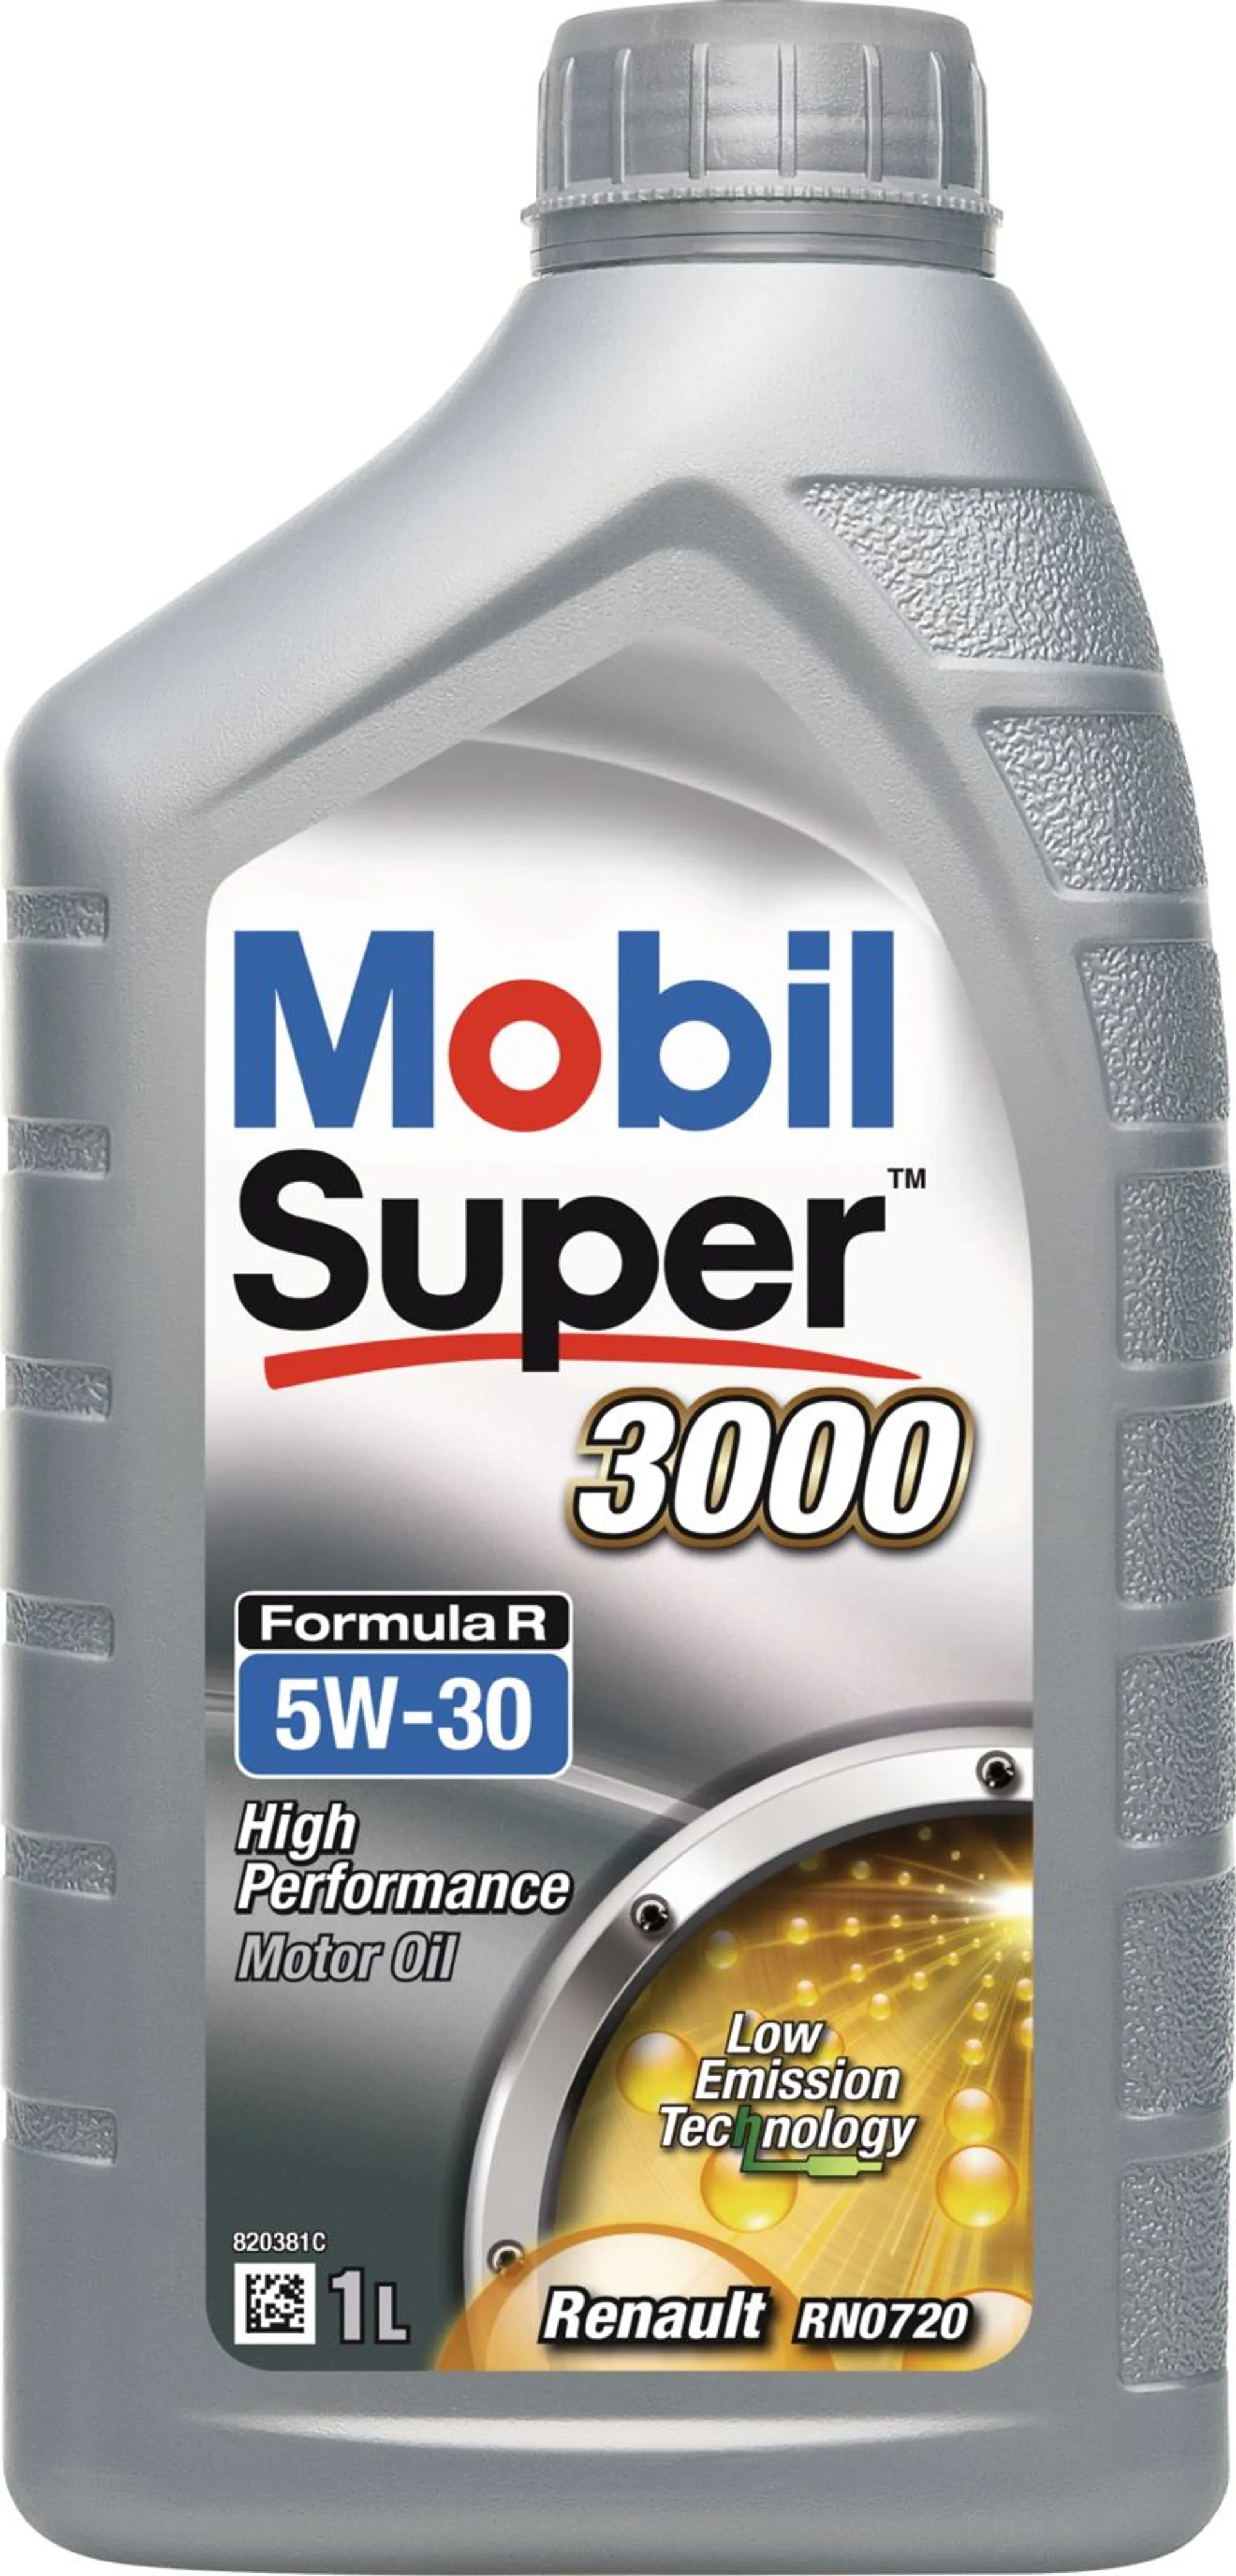 Mobil Super 3000 1l moottoriöljy Formula R 5W-30